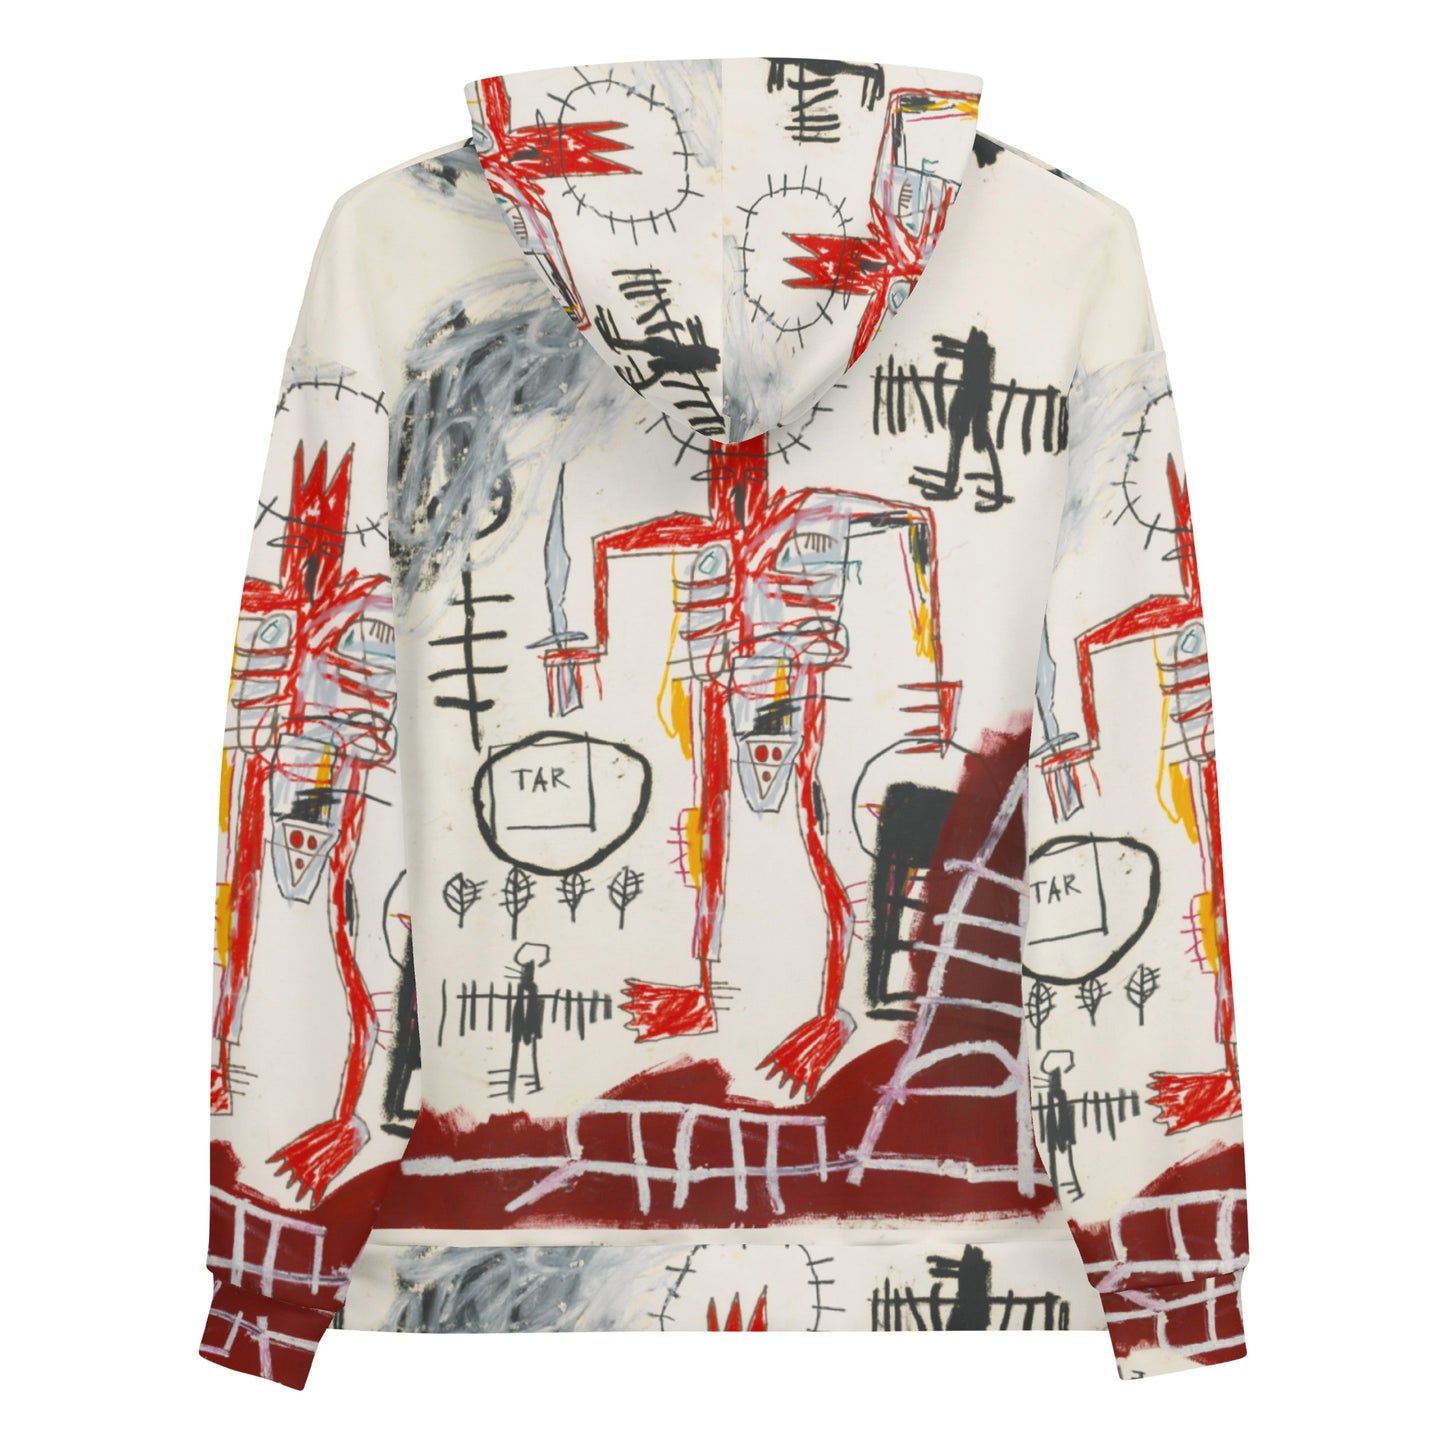 Jean-Michel Basquiat "Untitled" Artwork Printed Premium Streetwear Sweatshirt Hoodie Harajuku Graffiti 